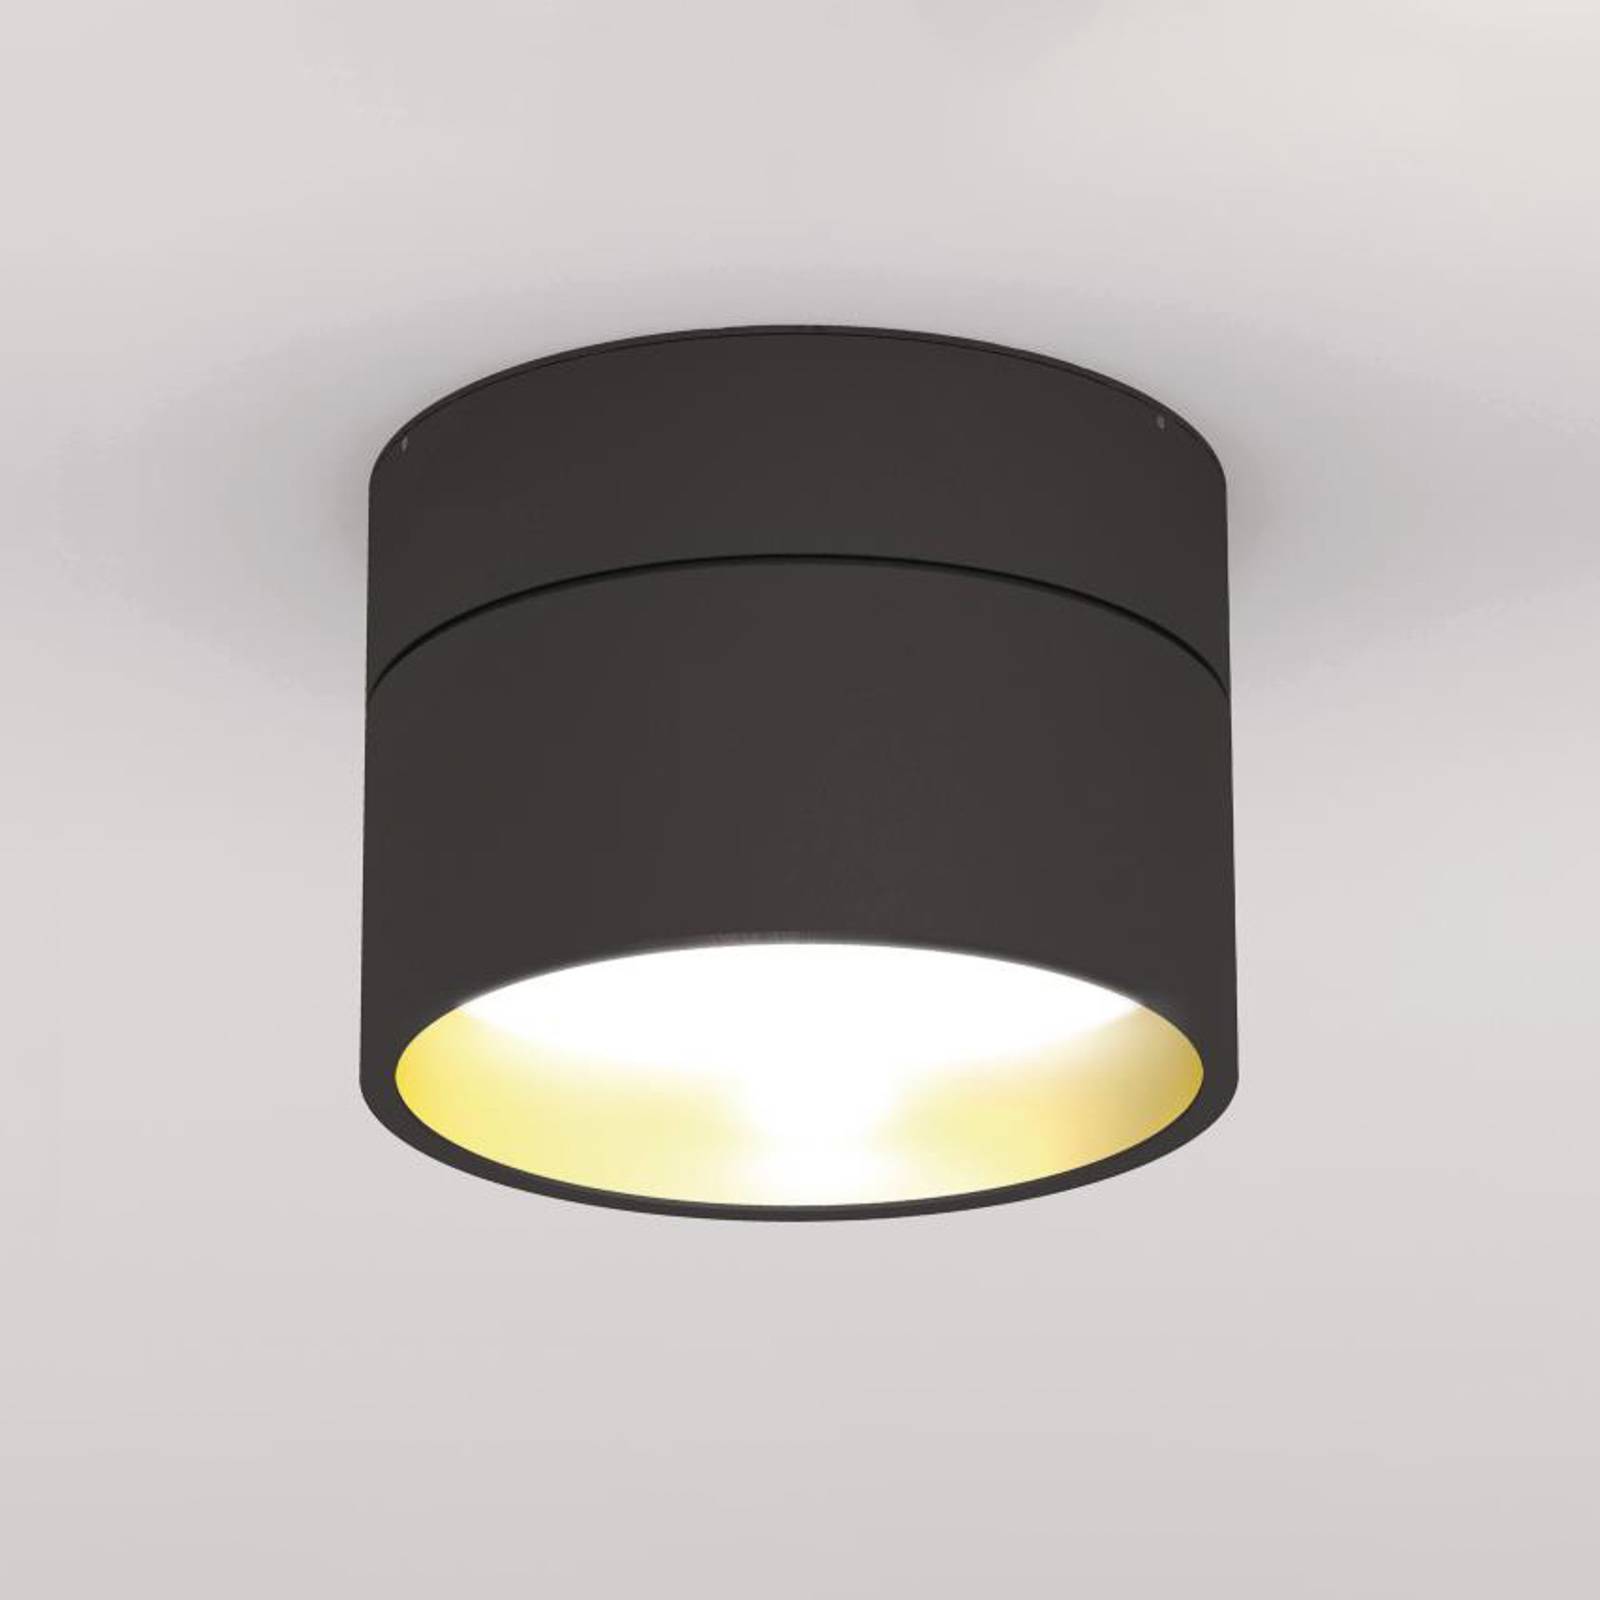 Turn on LED plafondlamp dim 2700K zwart/goud